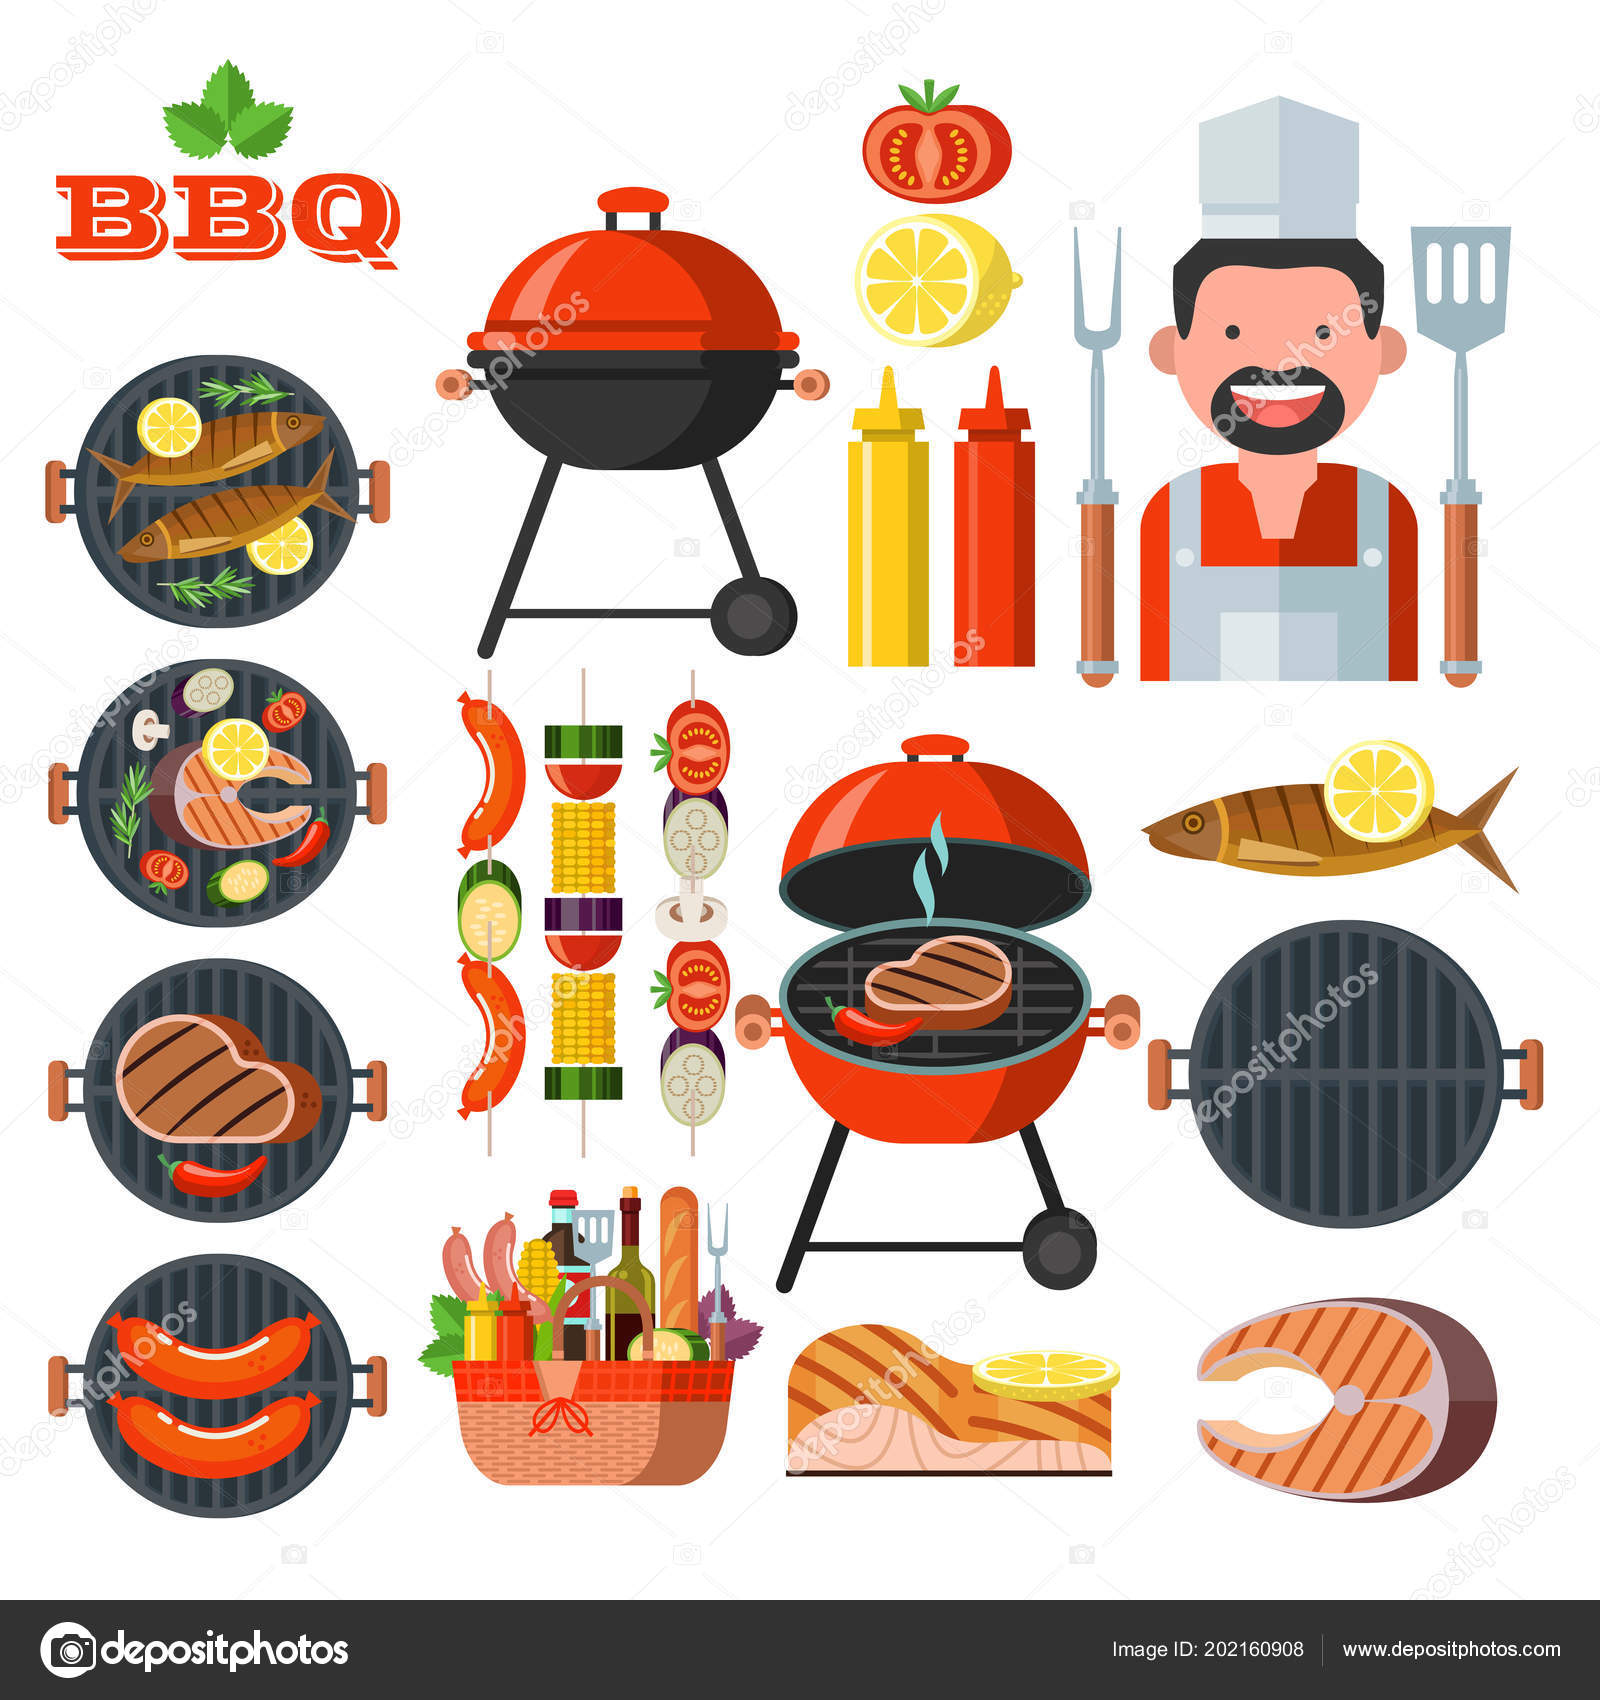 https://st4.depositphotos.com/4641215/20216/v/1600/depositphotos_202160908-stock-illustration-barbecue-grill-set-colorful-clip.jpg